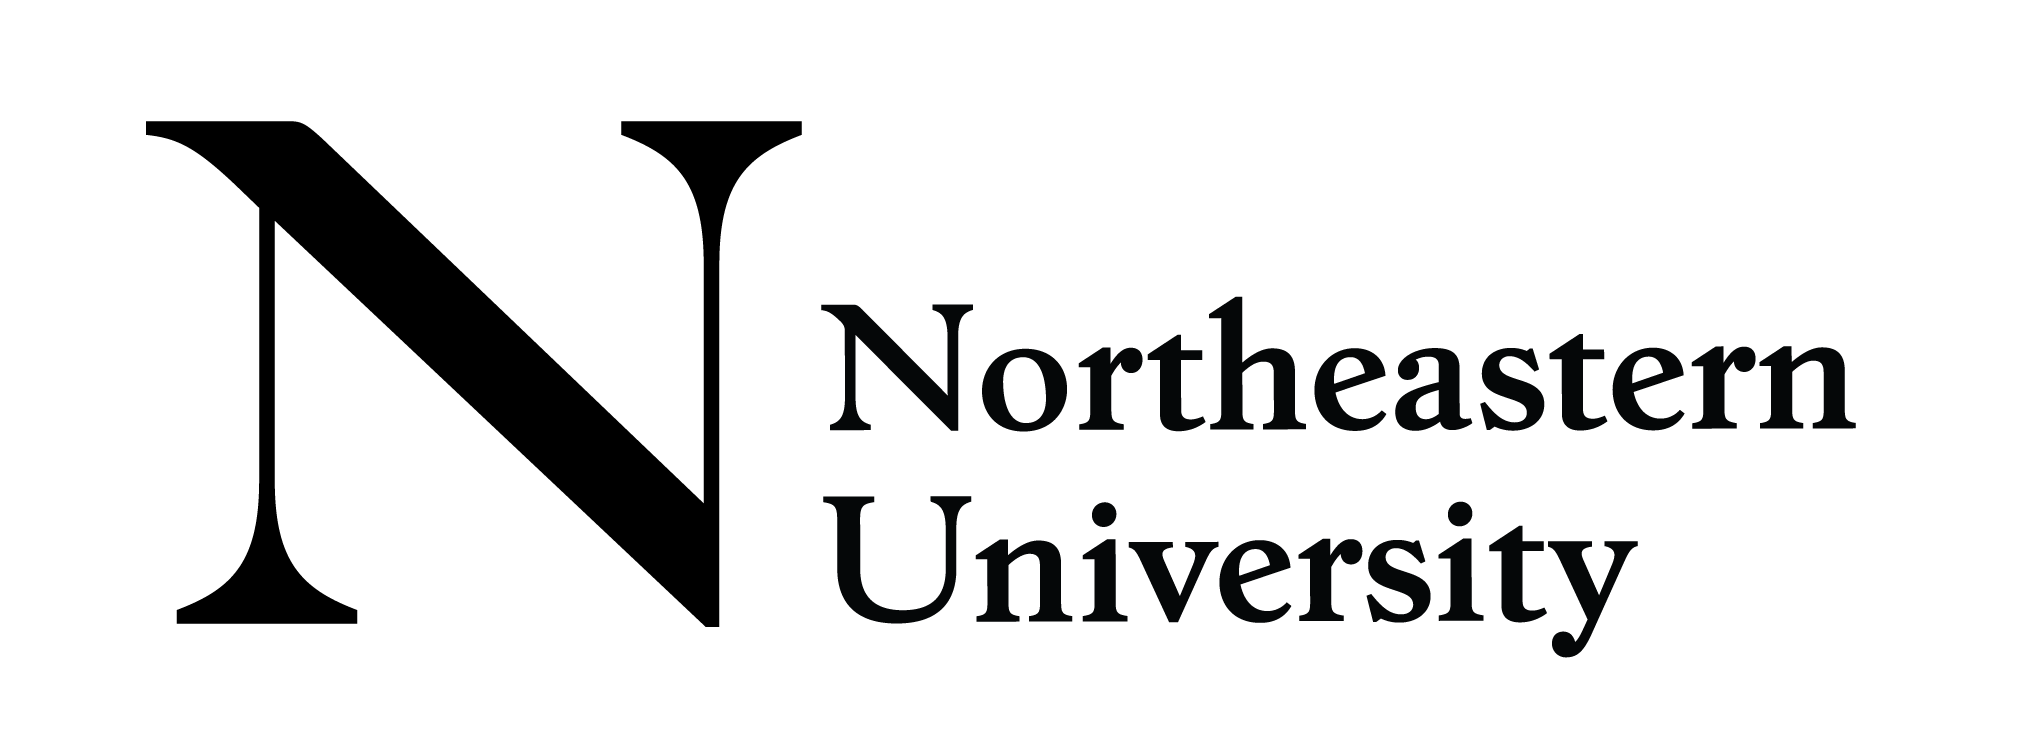 Northeastern university giving day